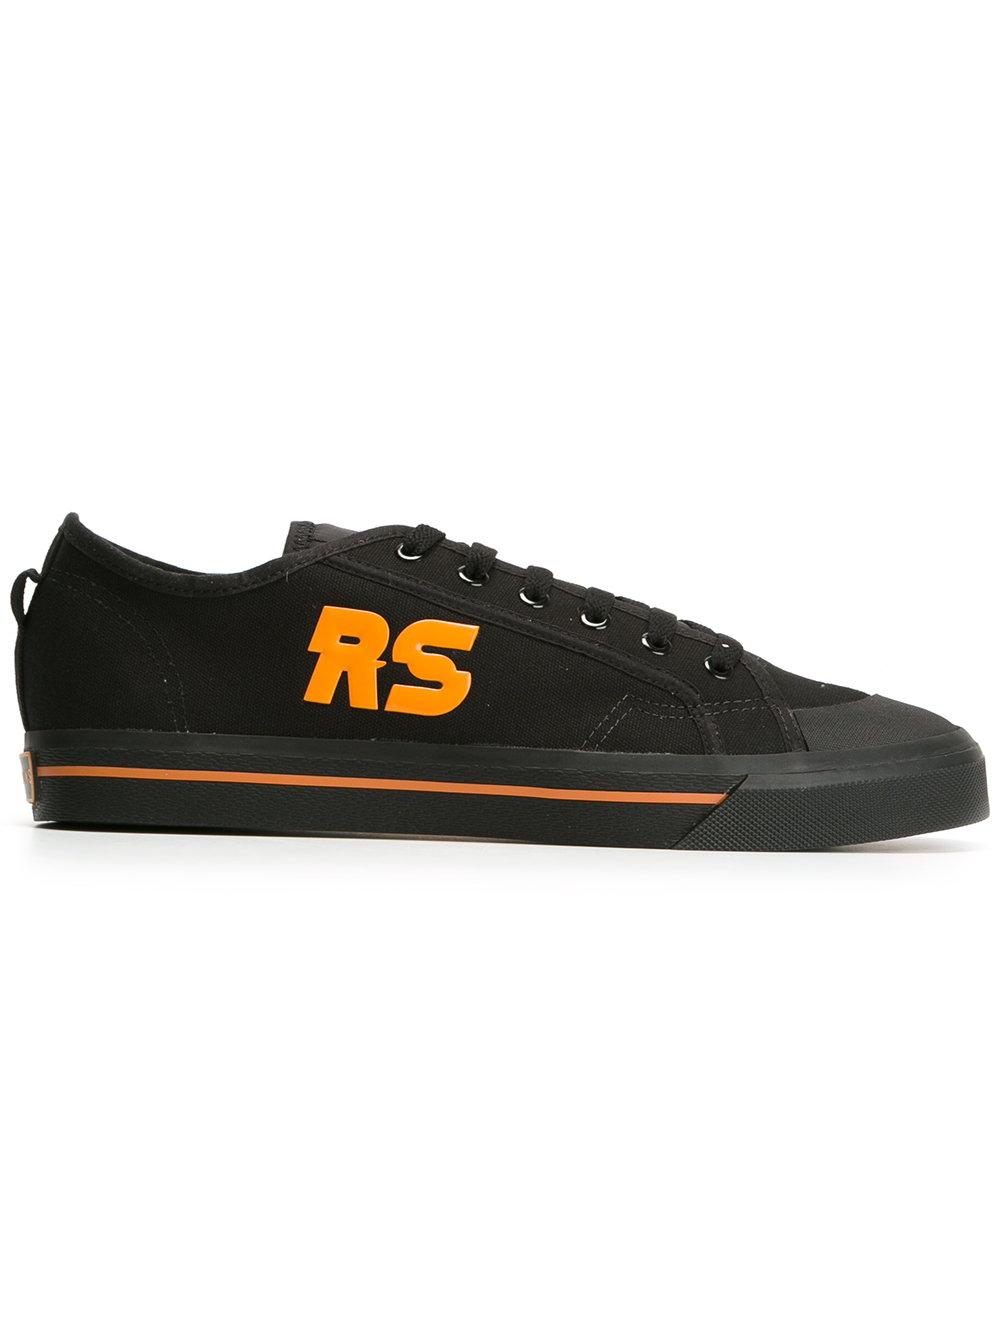 Adidas by raf simons Spirit Sneakers in Black for Men | Lyst